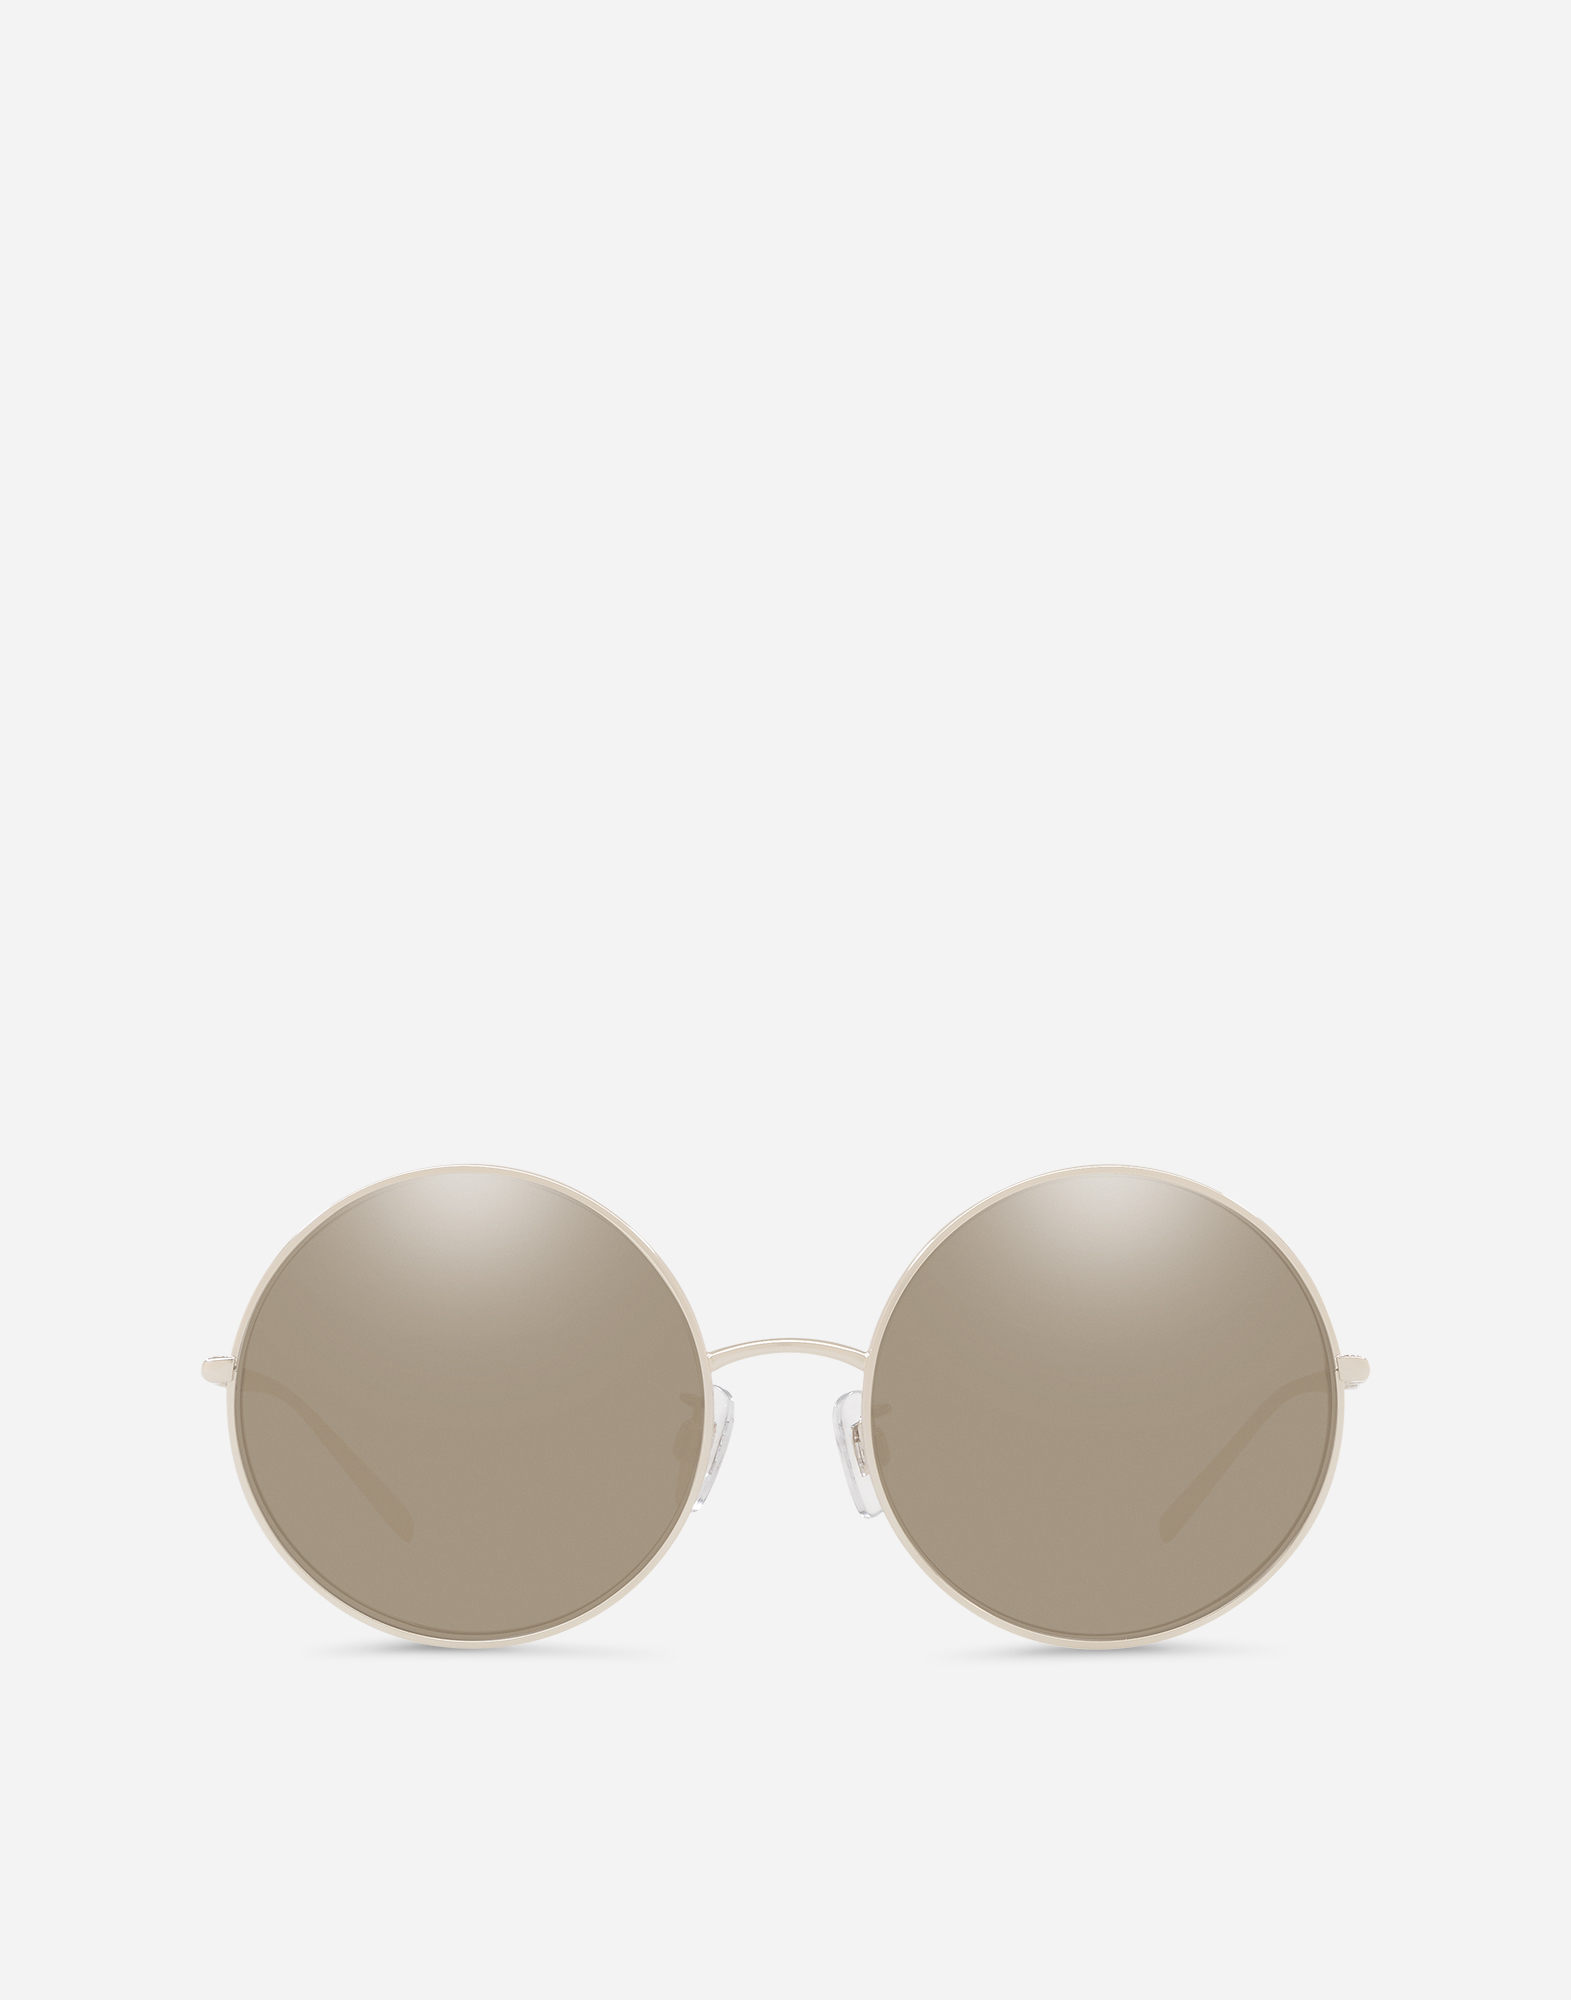 d&g gold sunglasses